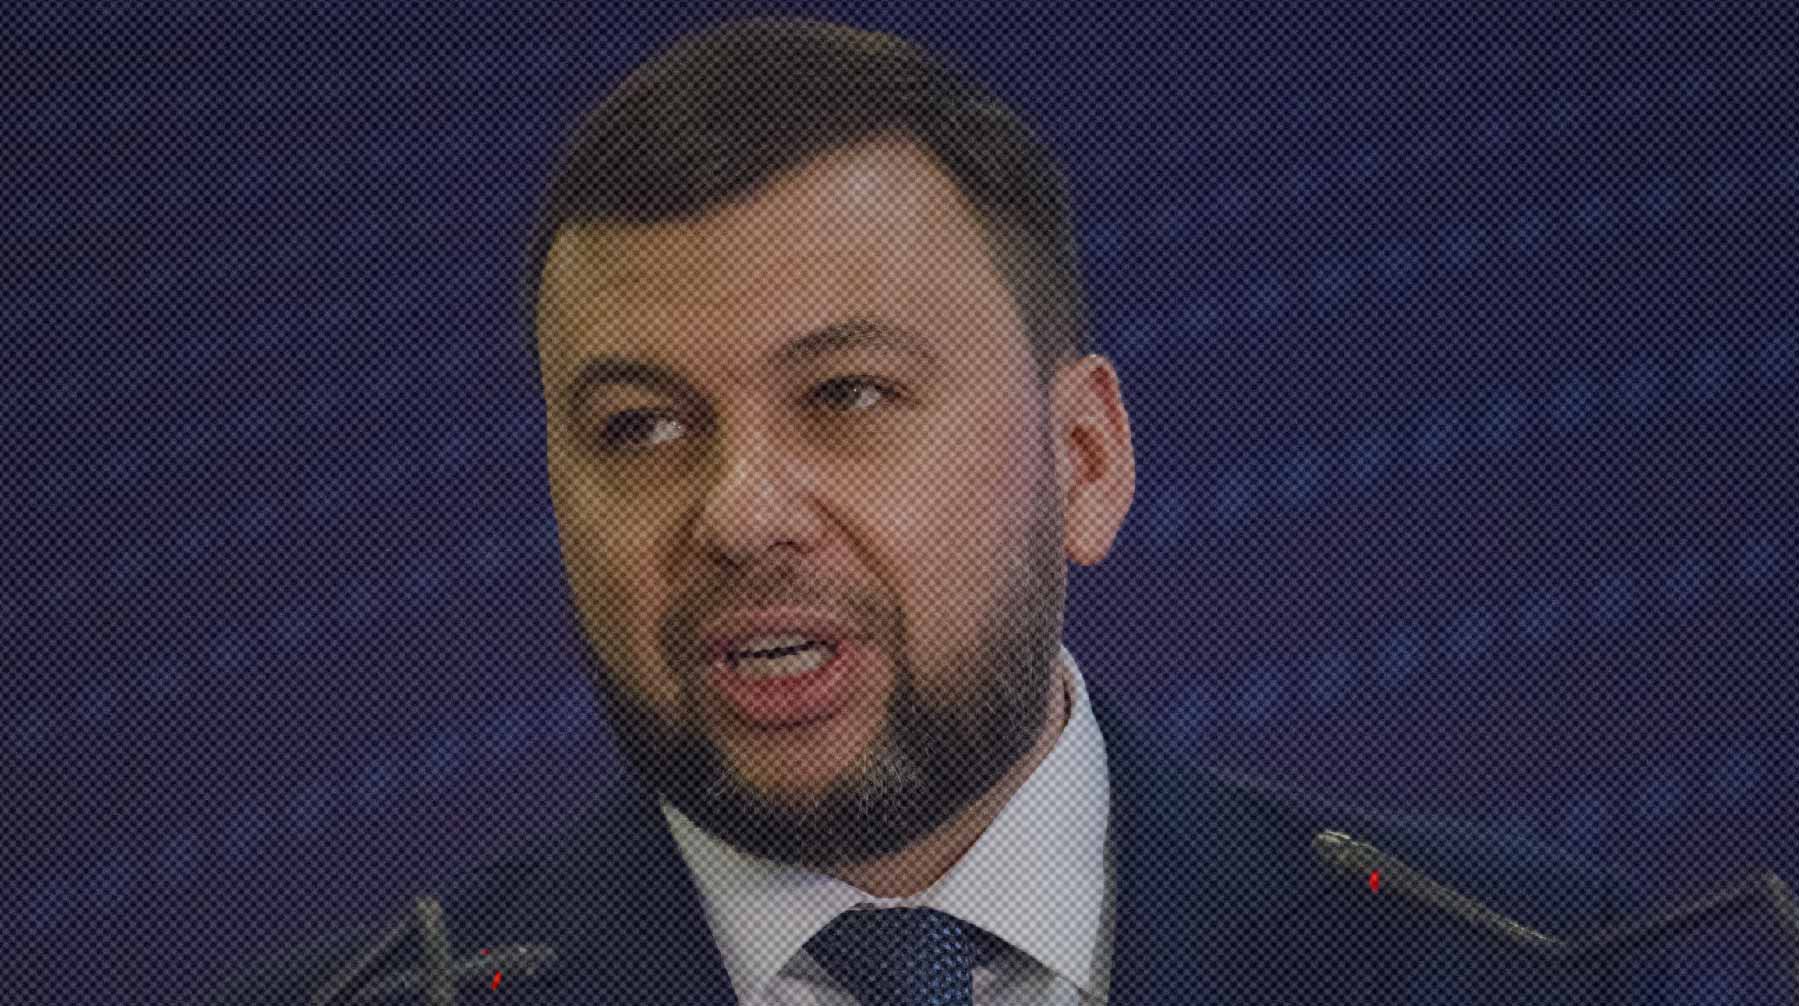 Dailystorm - Глава ДНР объявил всеобщую мобилизацию